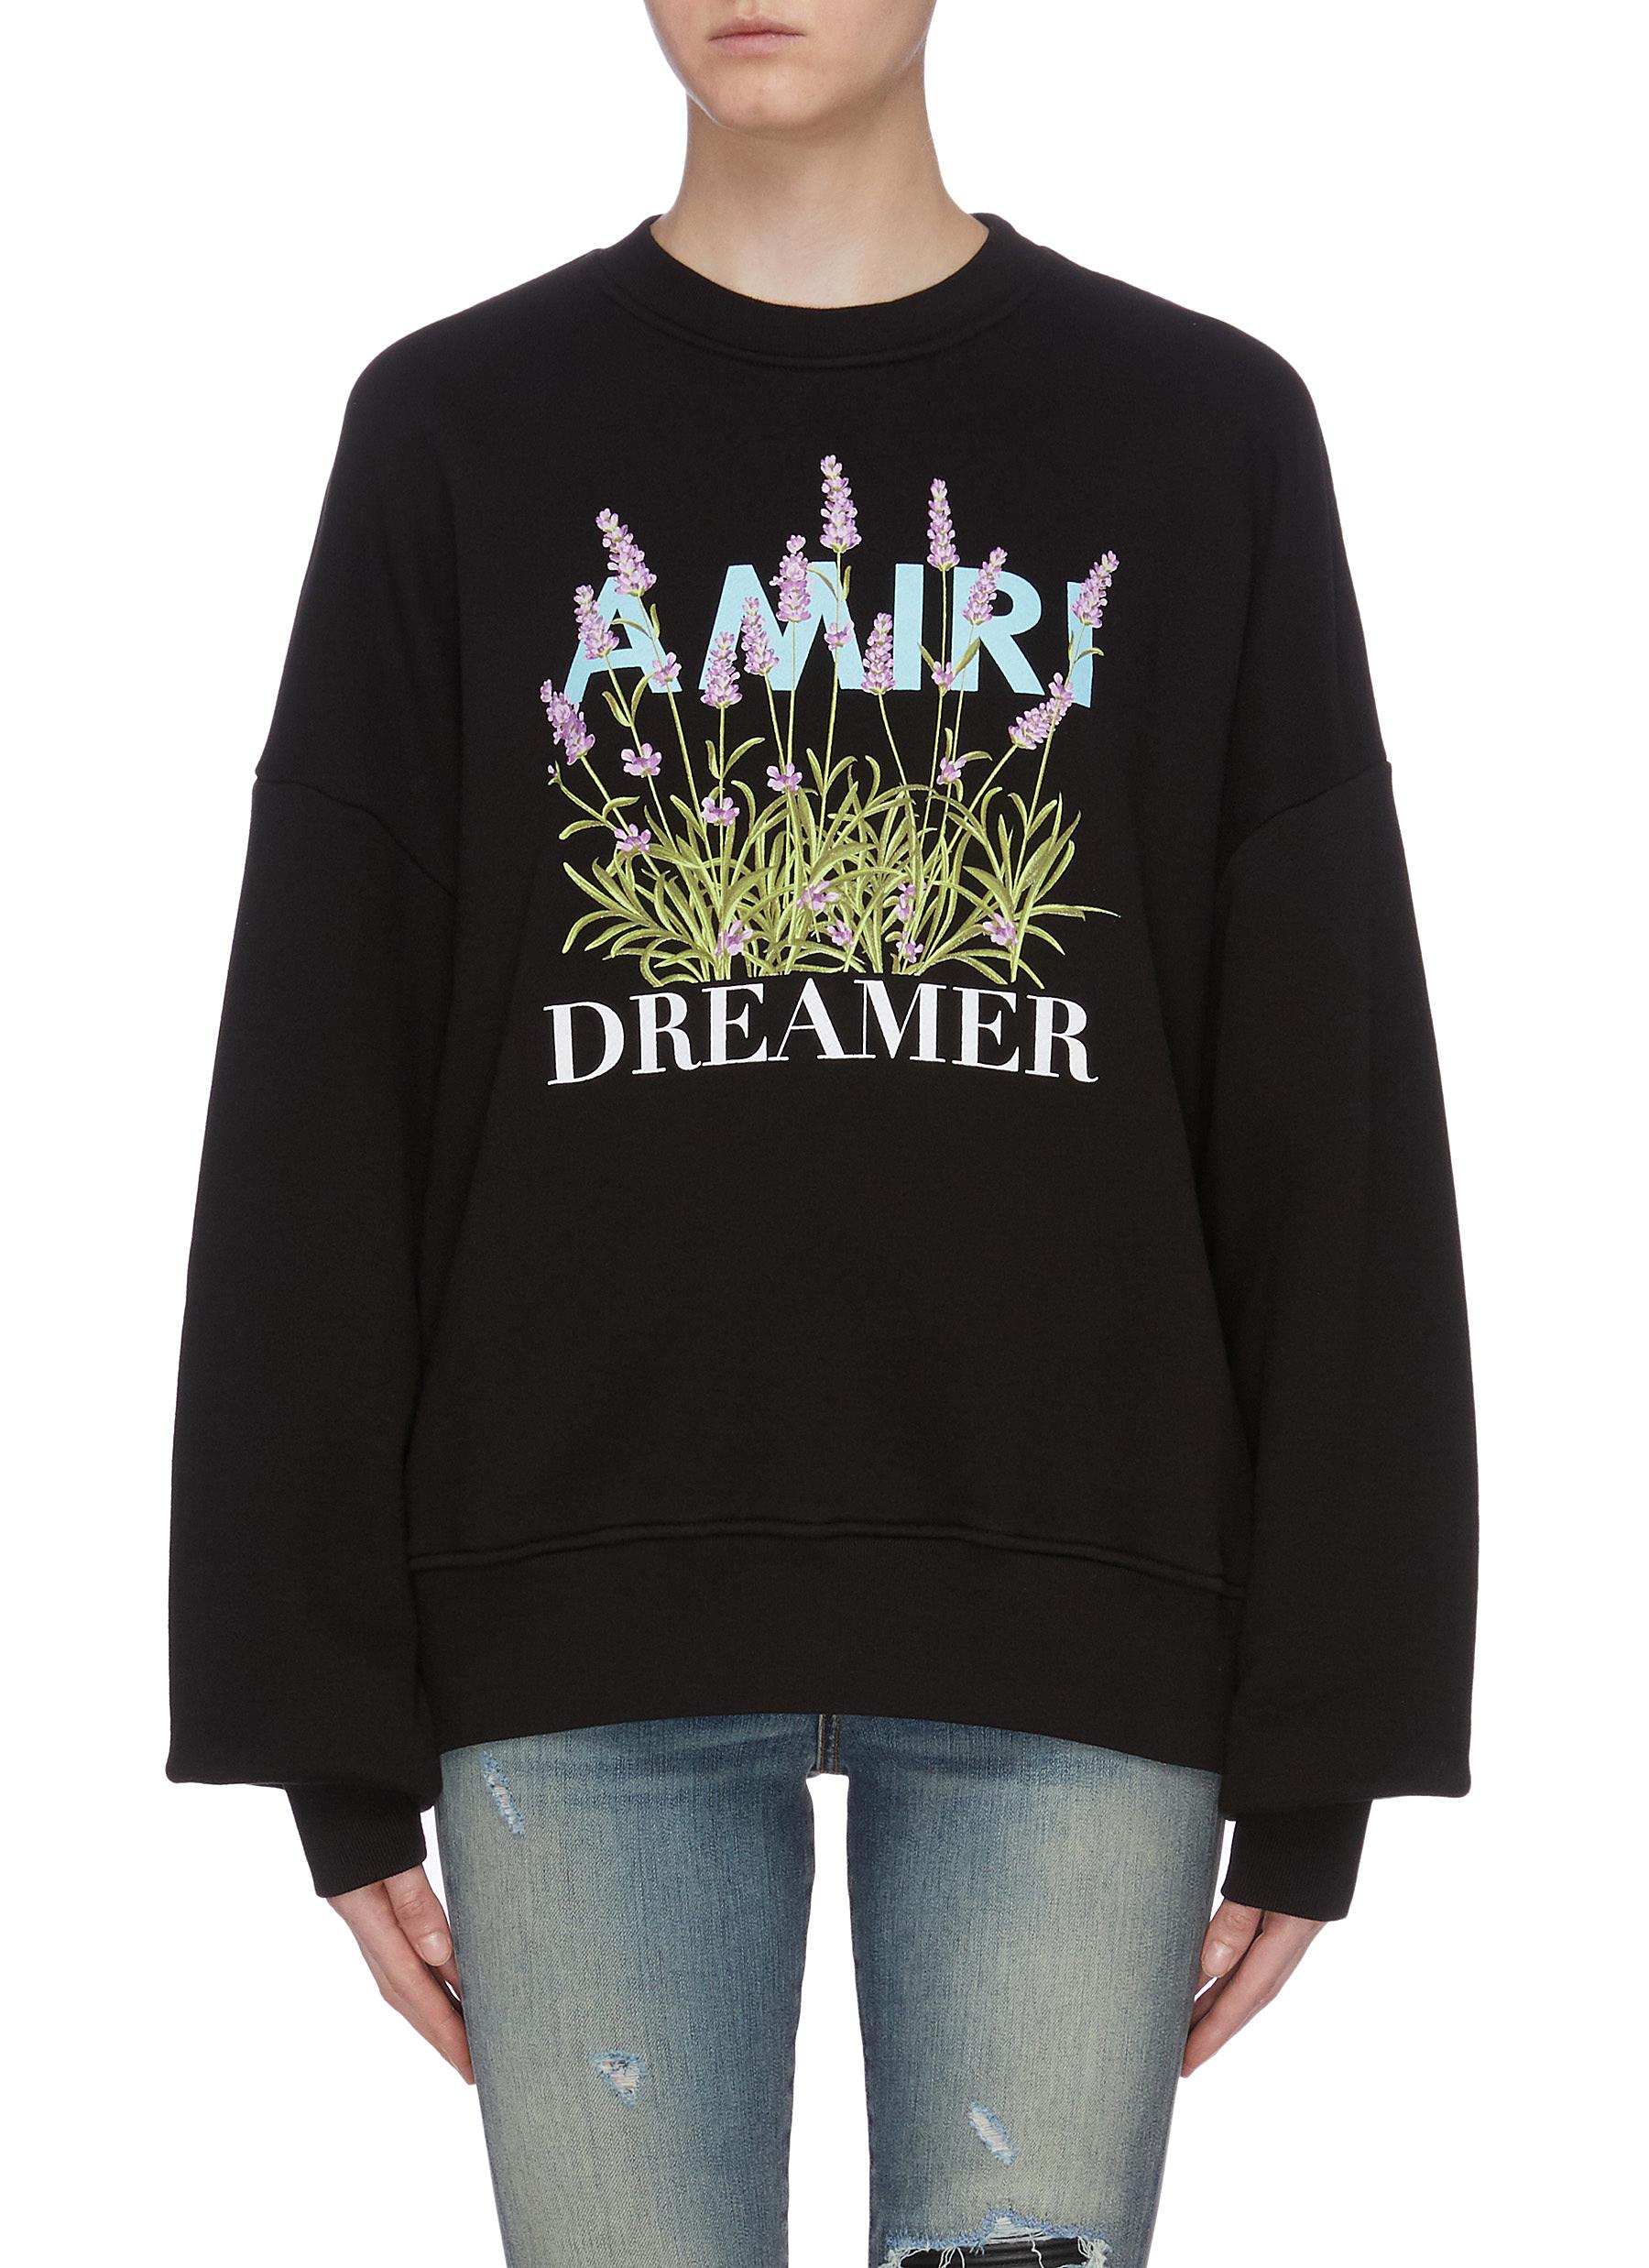 Flower Dreamer graphic print sweatshirt by Amiri